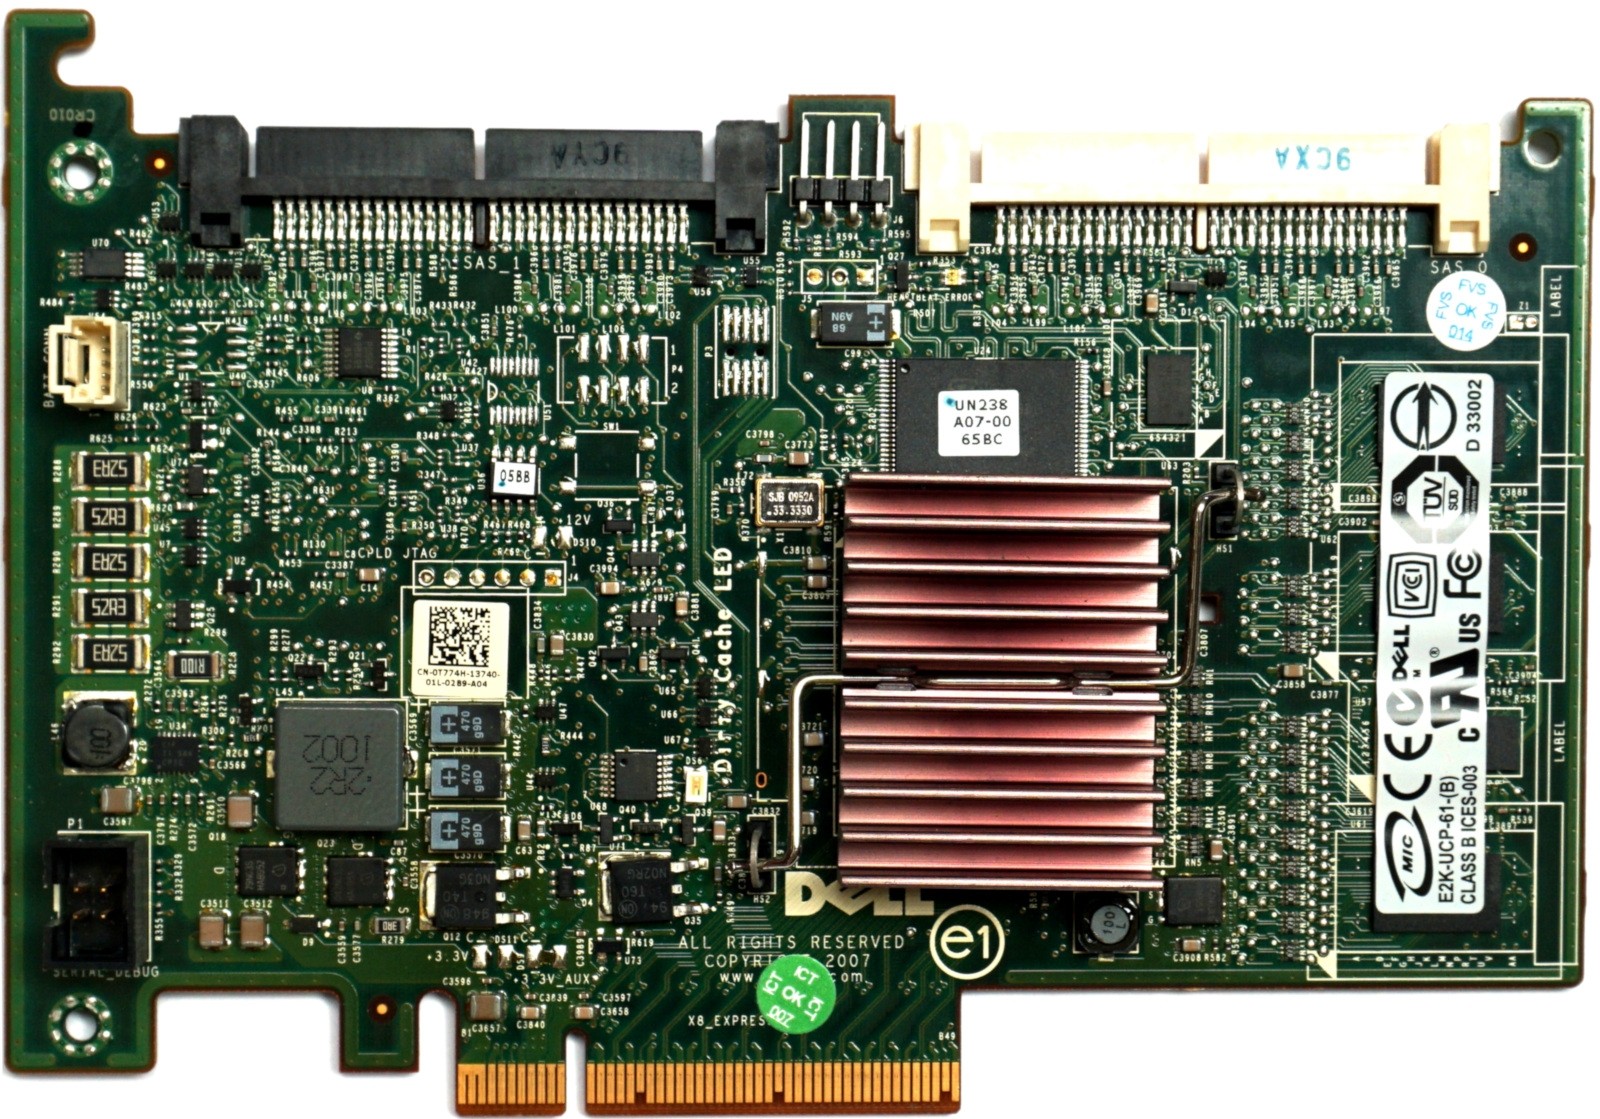 Dell PERC 6/i 256MB - PCIe-x8 RAID Controller Card